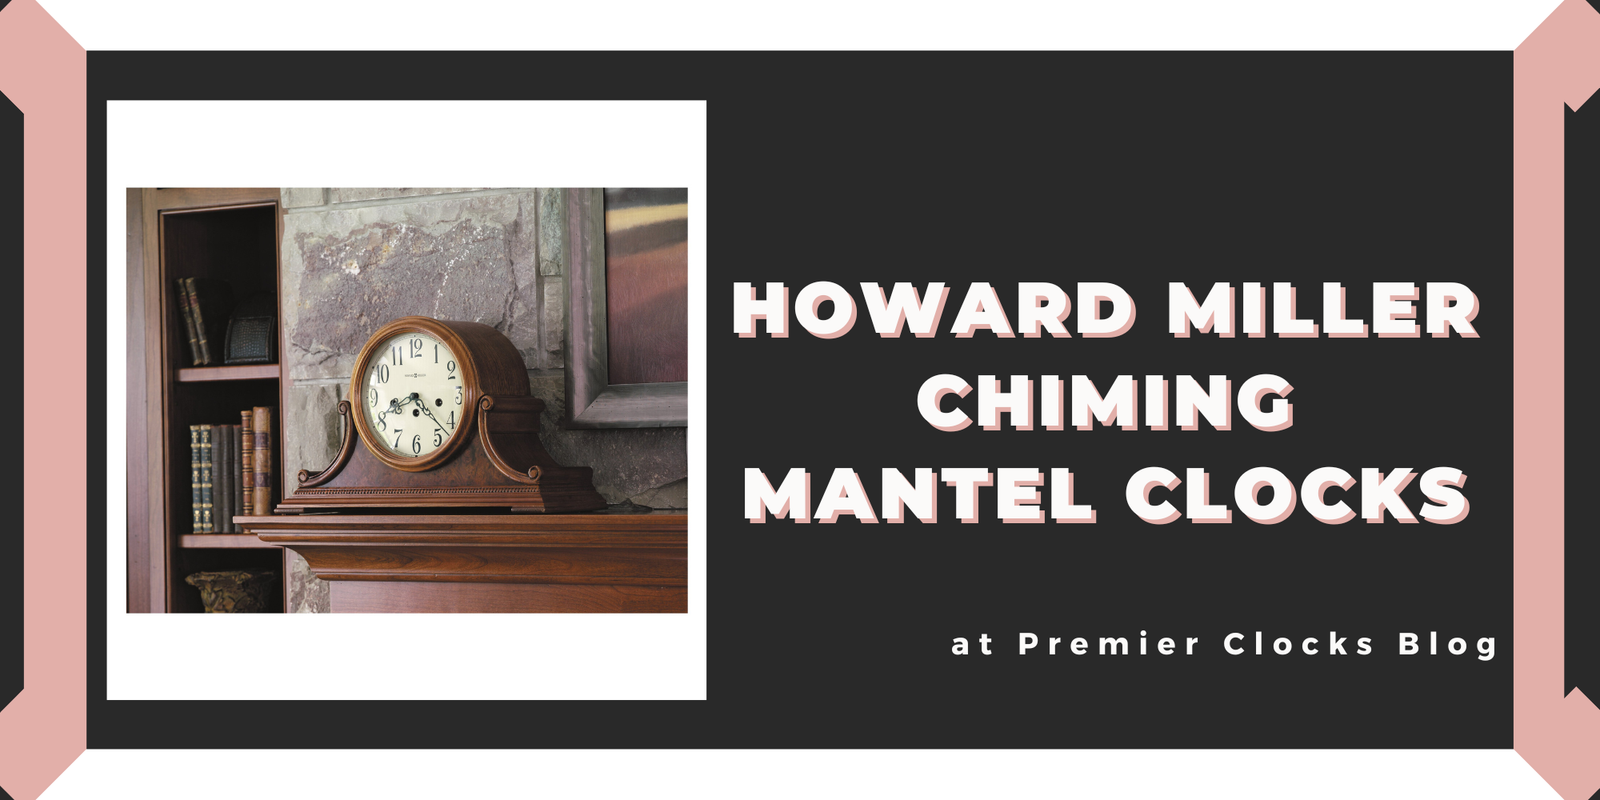 Howard Miller Chiming Mantel Clocks